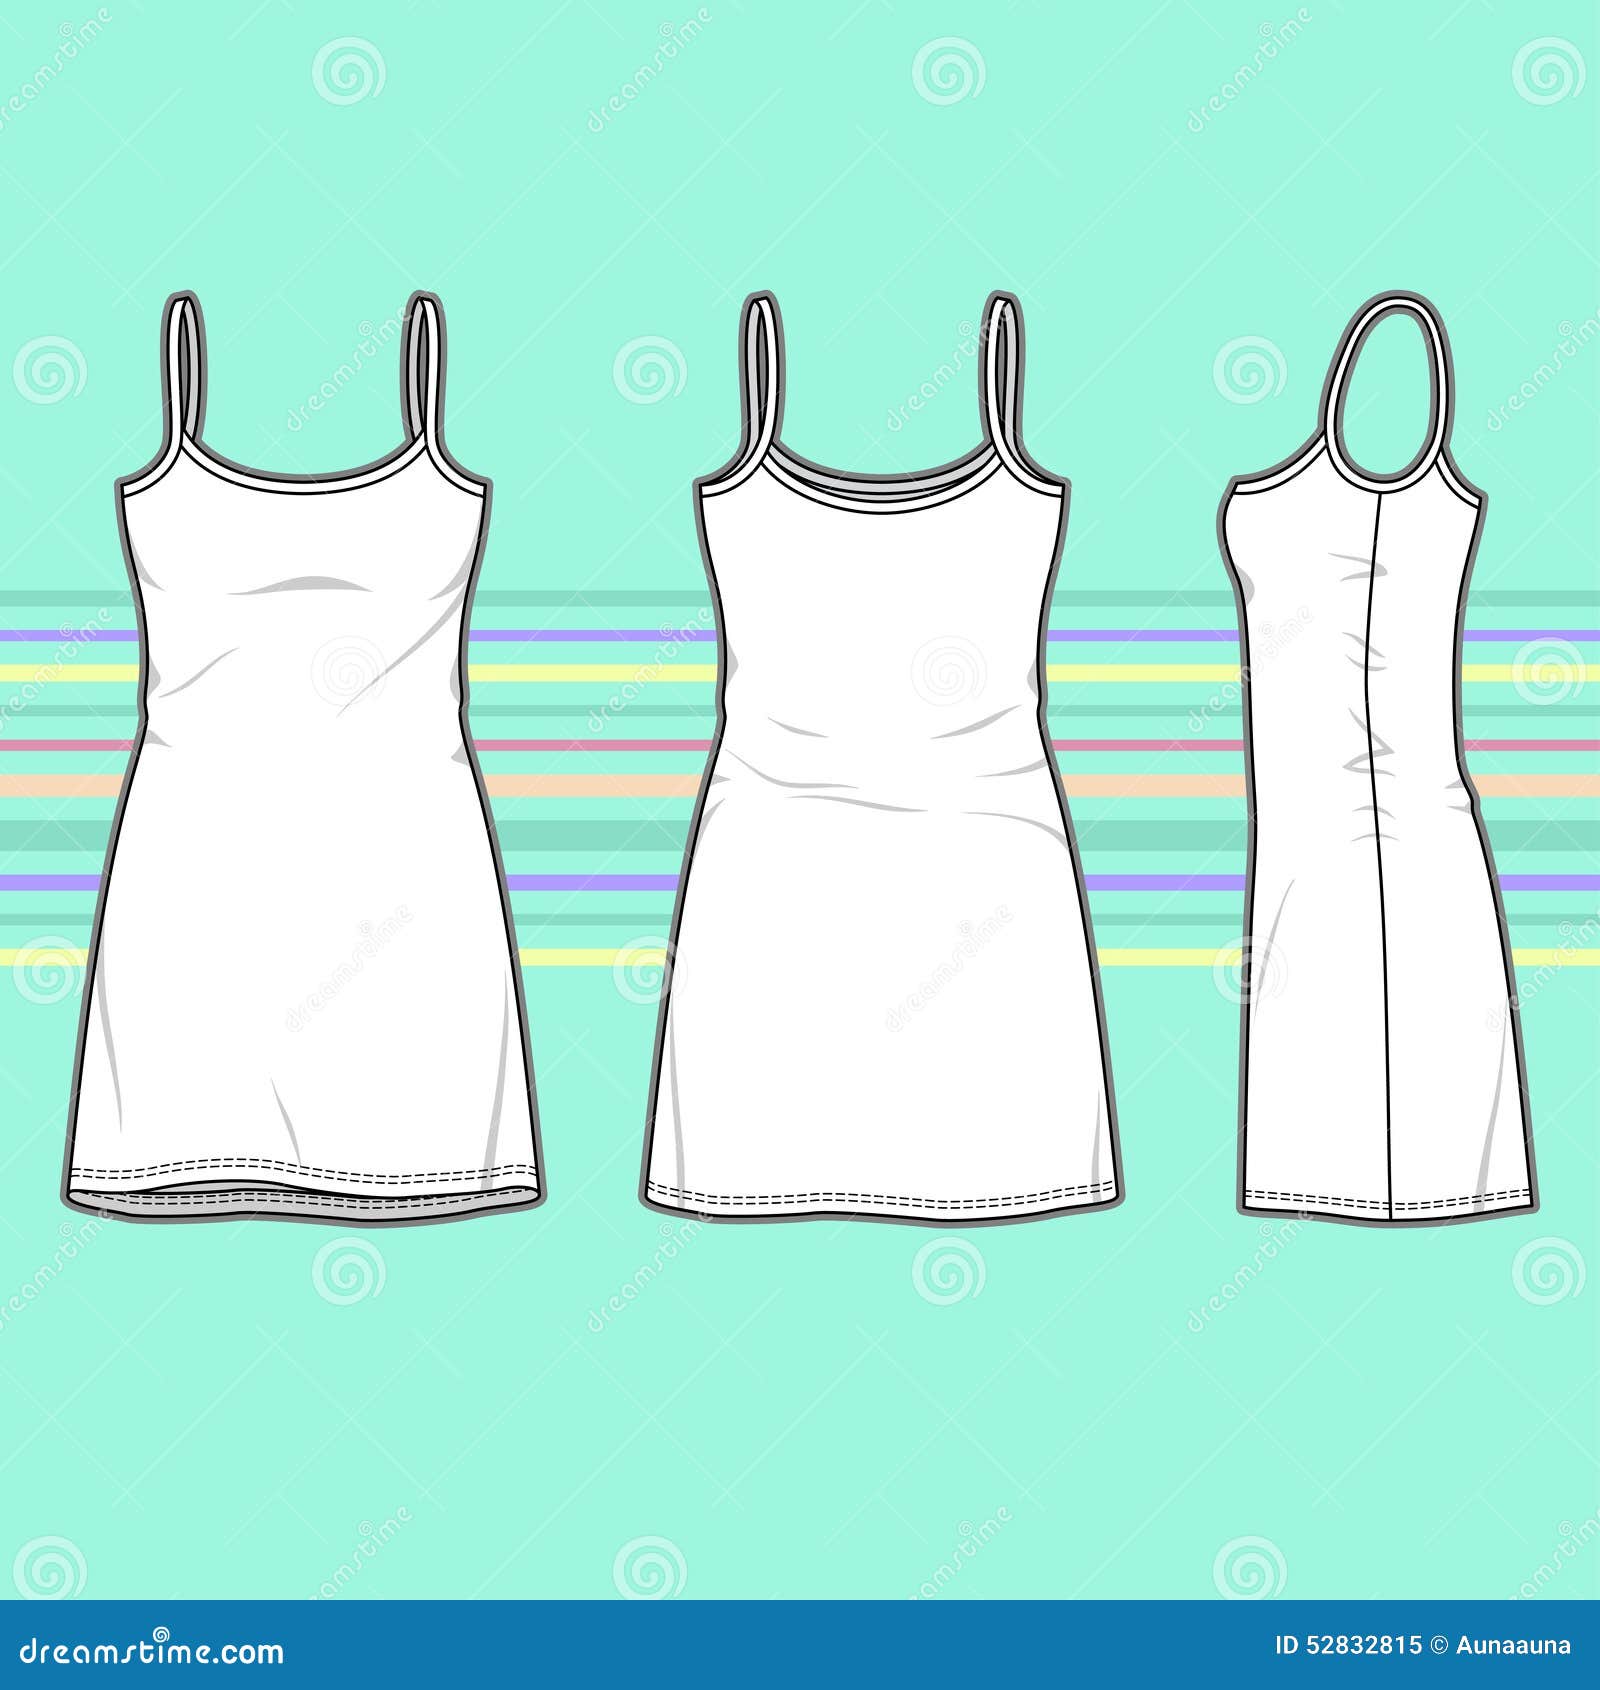 Simple dress stock vector. Illustration of chemise, female - 52832815